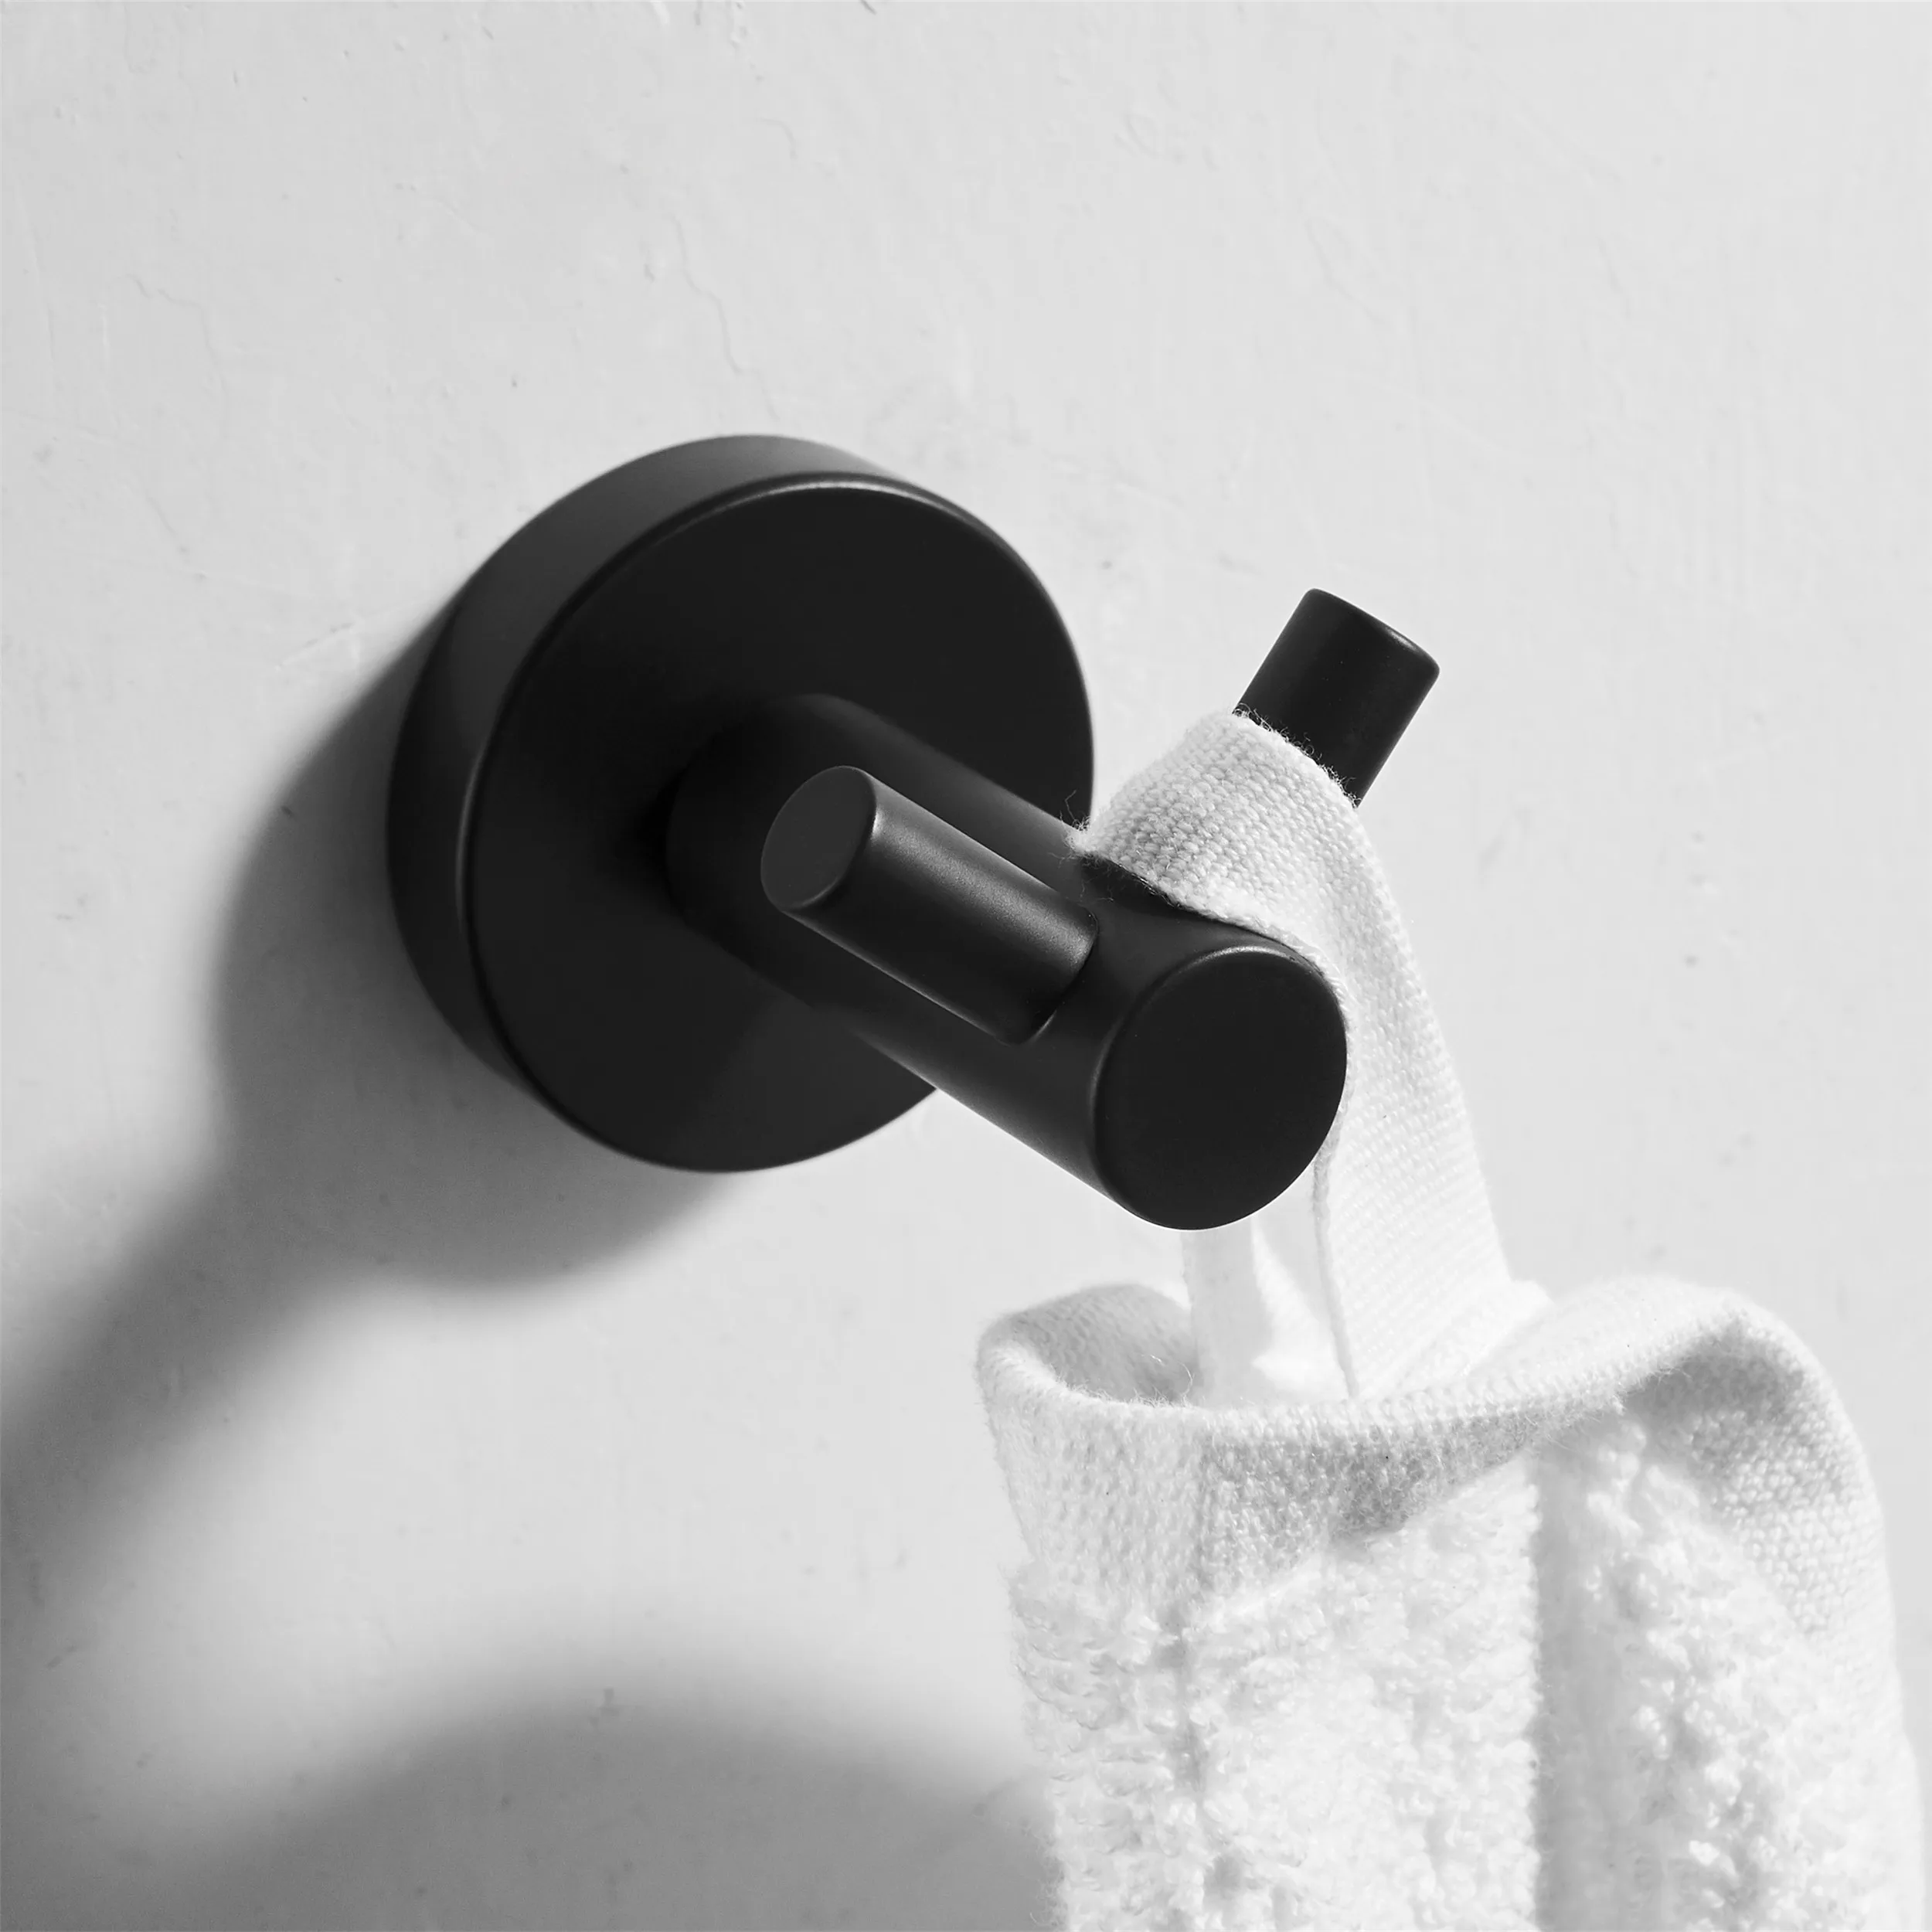 Stainless Steel Robe Hooks Black Decorative Coat Hooks Rack Wall Hanger Bathroom Hook for Towels Hat Bag Rack Wall Mounted